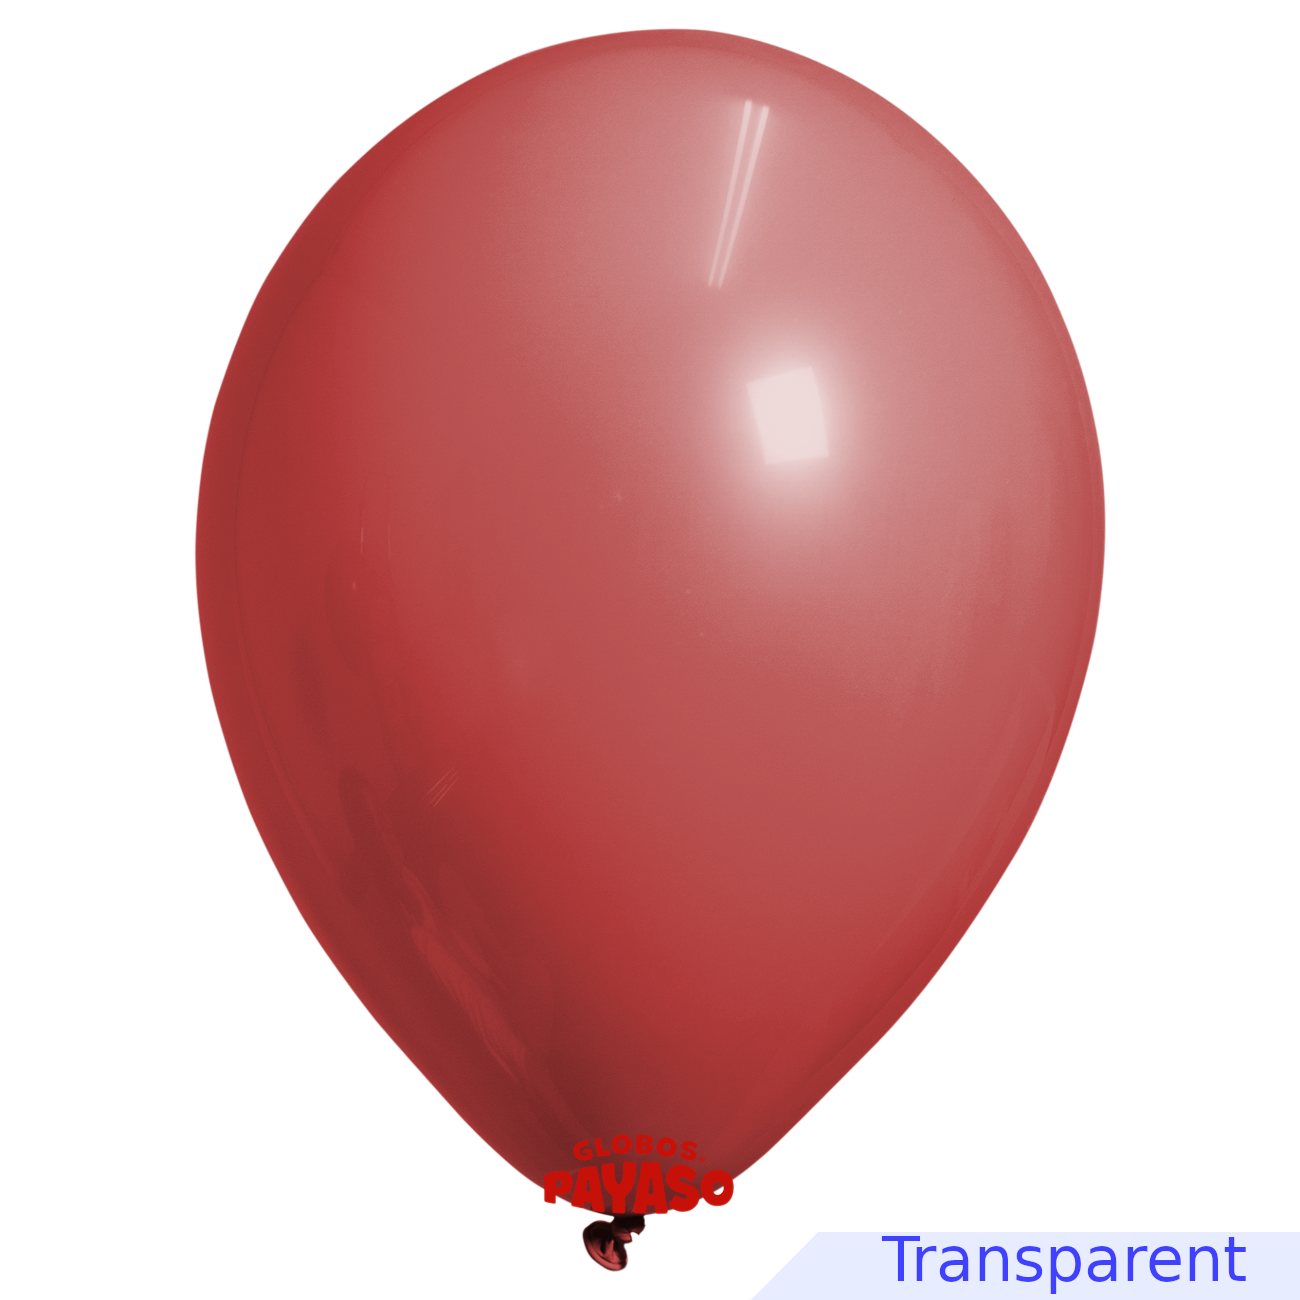 Globos Payaso / Unique 5" Cherry Red Translucid Decorator Balloon